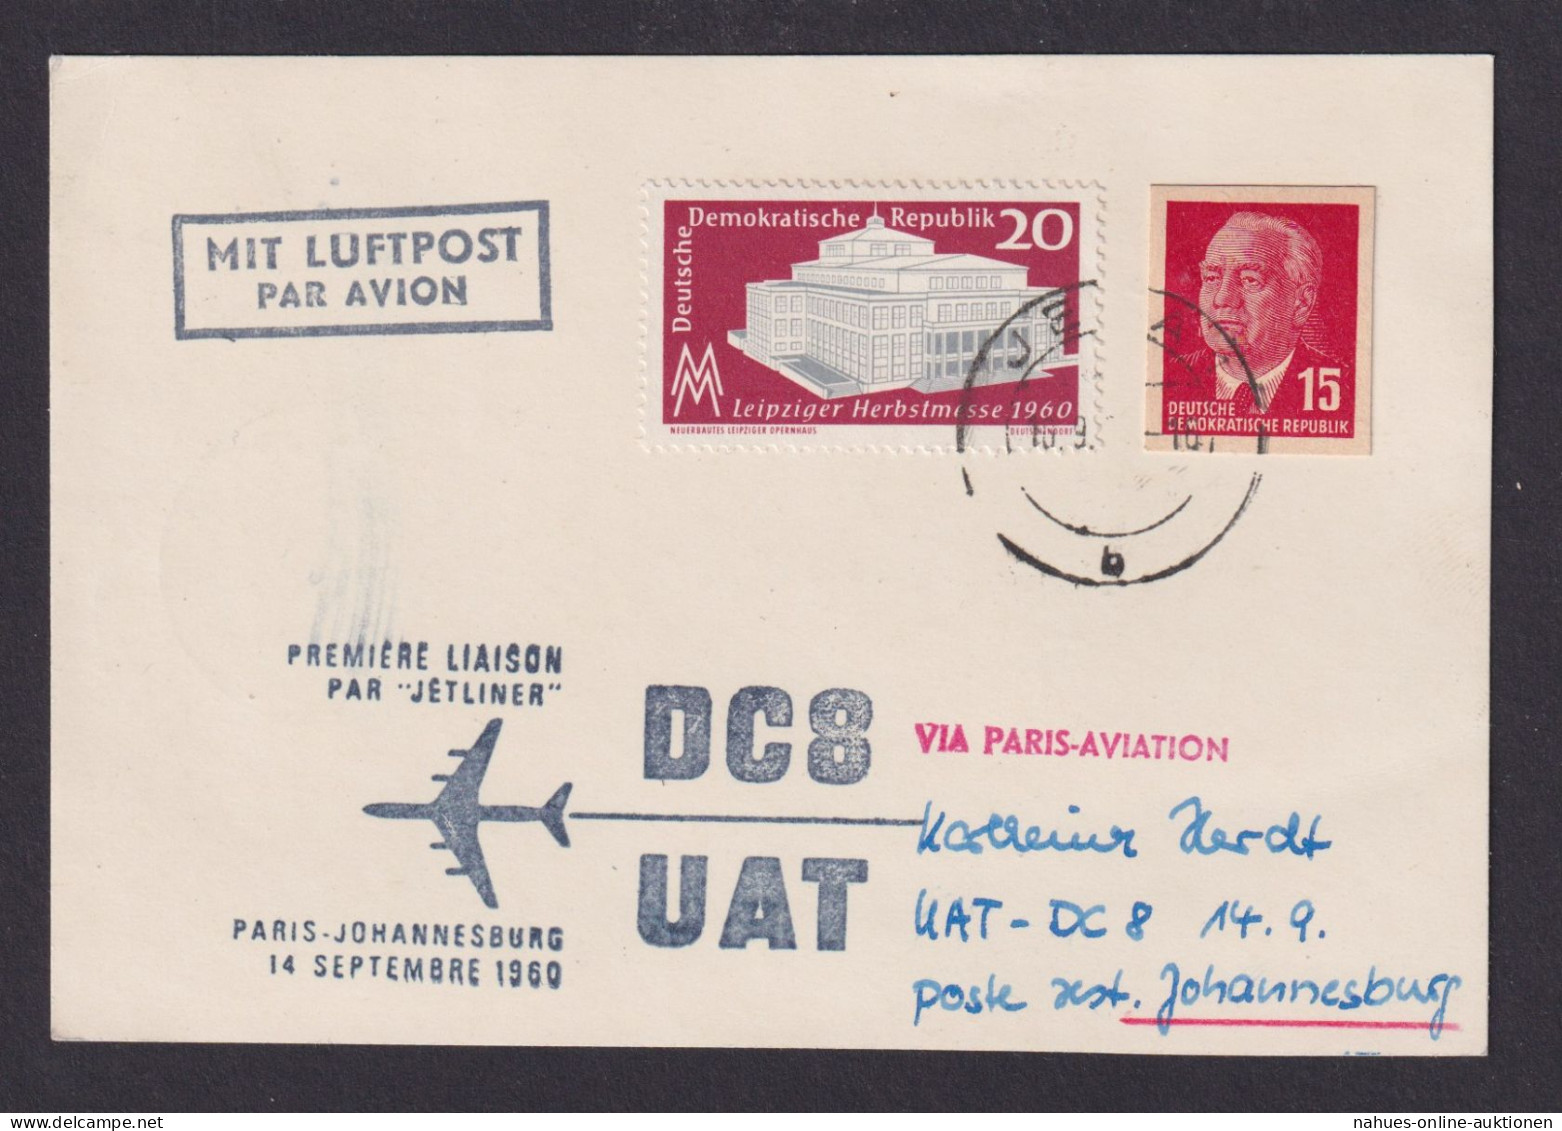 Flugpost Brief Air Mail DDR GAA Ganzsachenausschnitt Pieck Gute Destination - Postkarten - Gebraucht